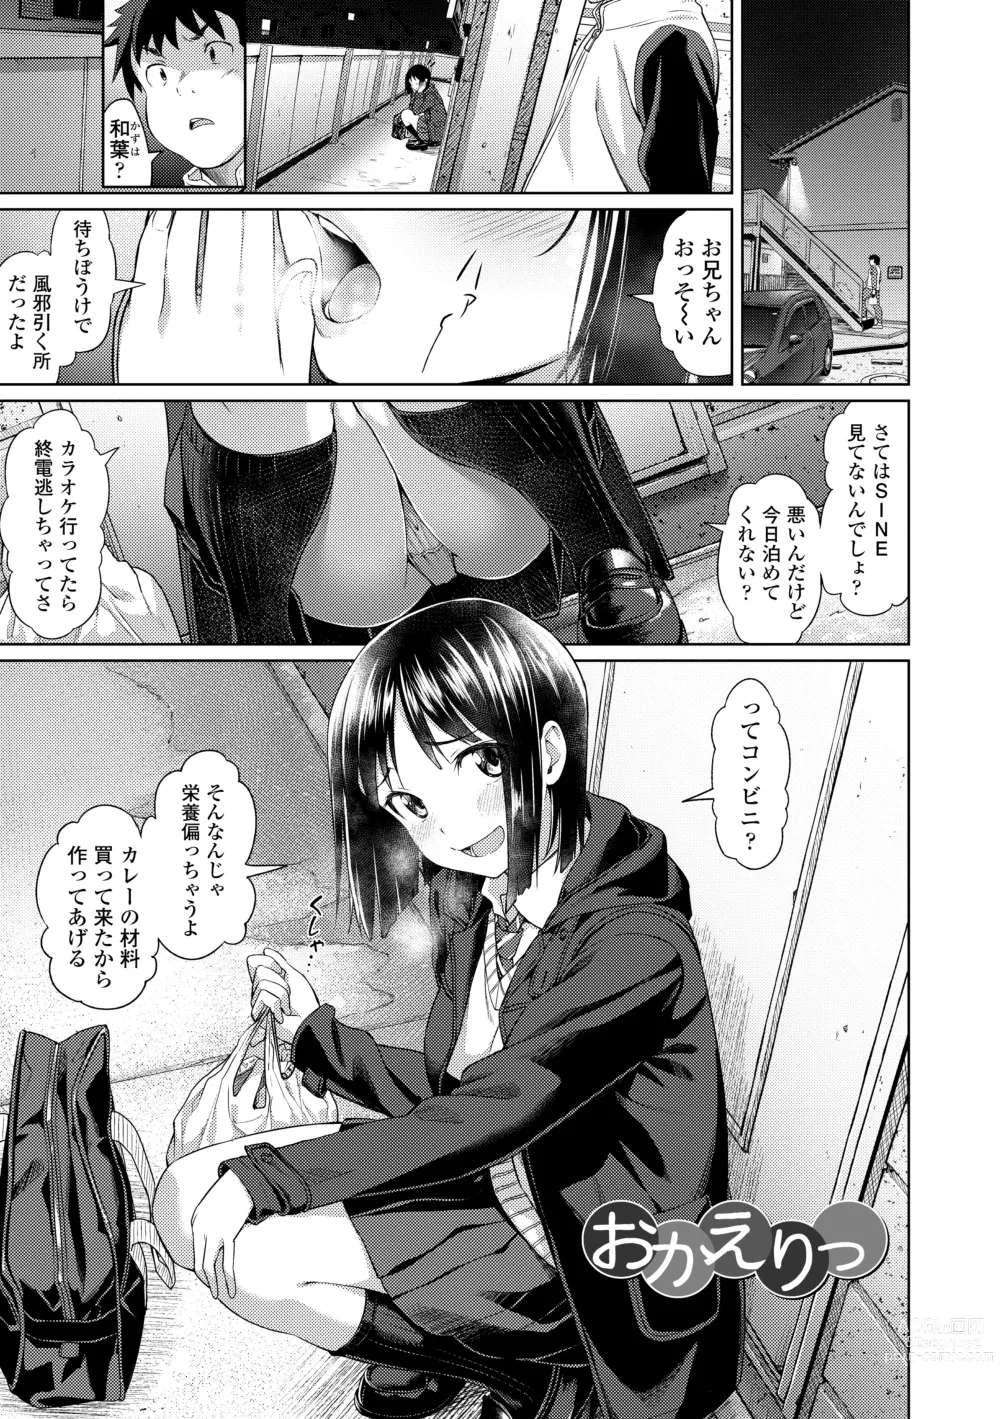 Page 5 of manga Aolove